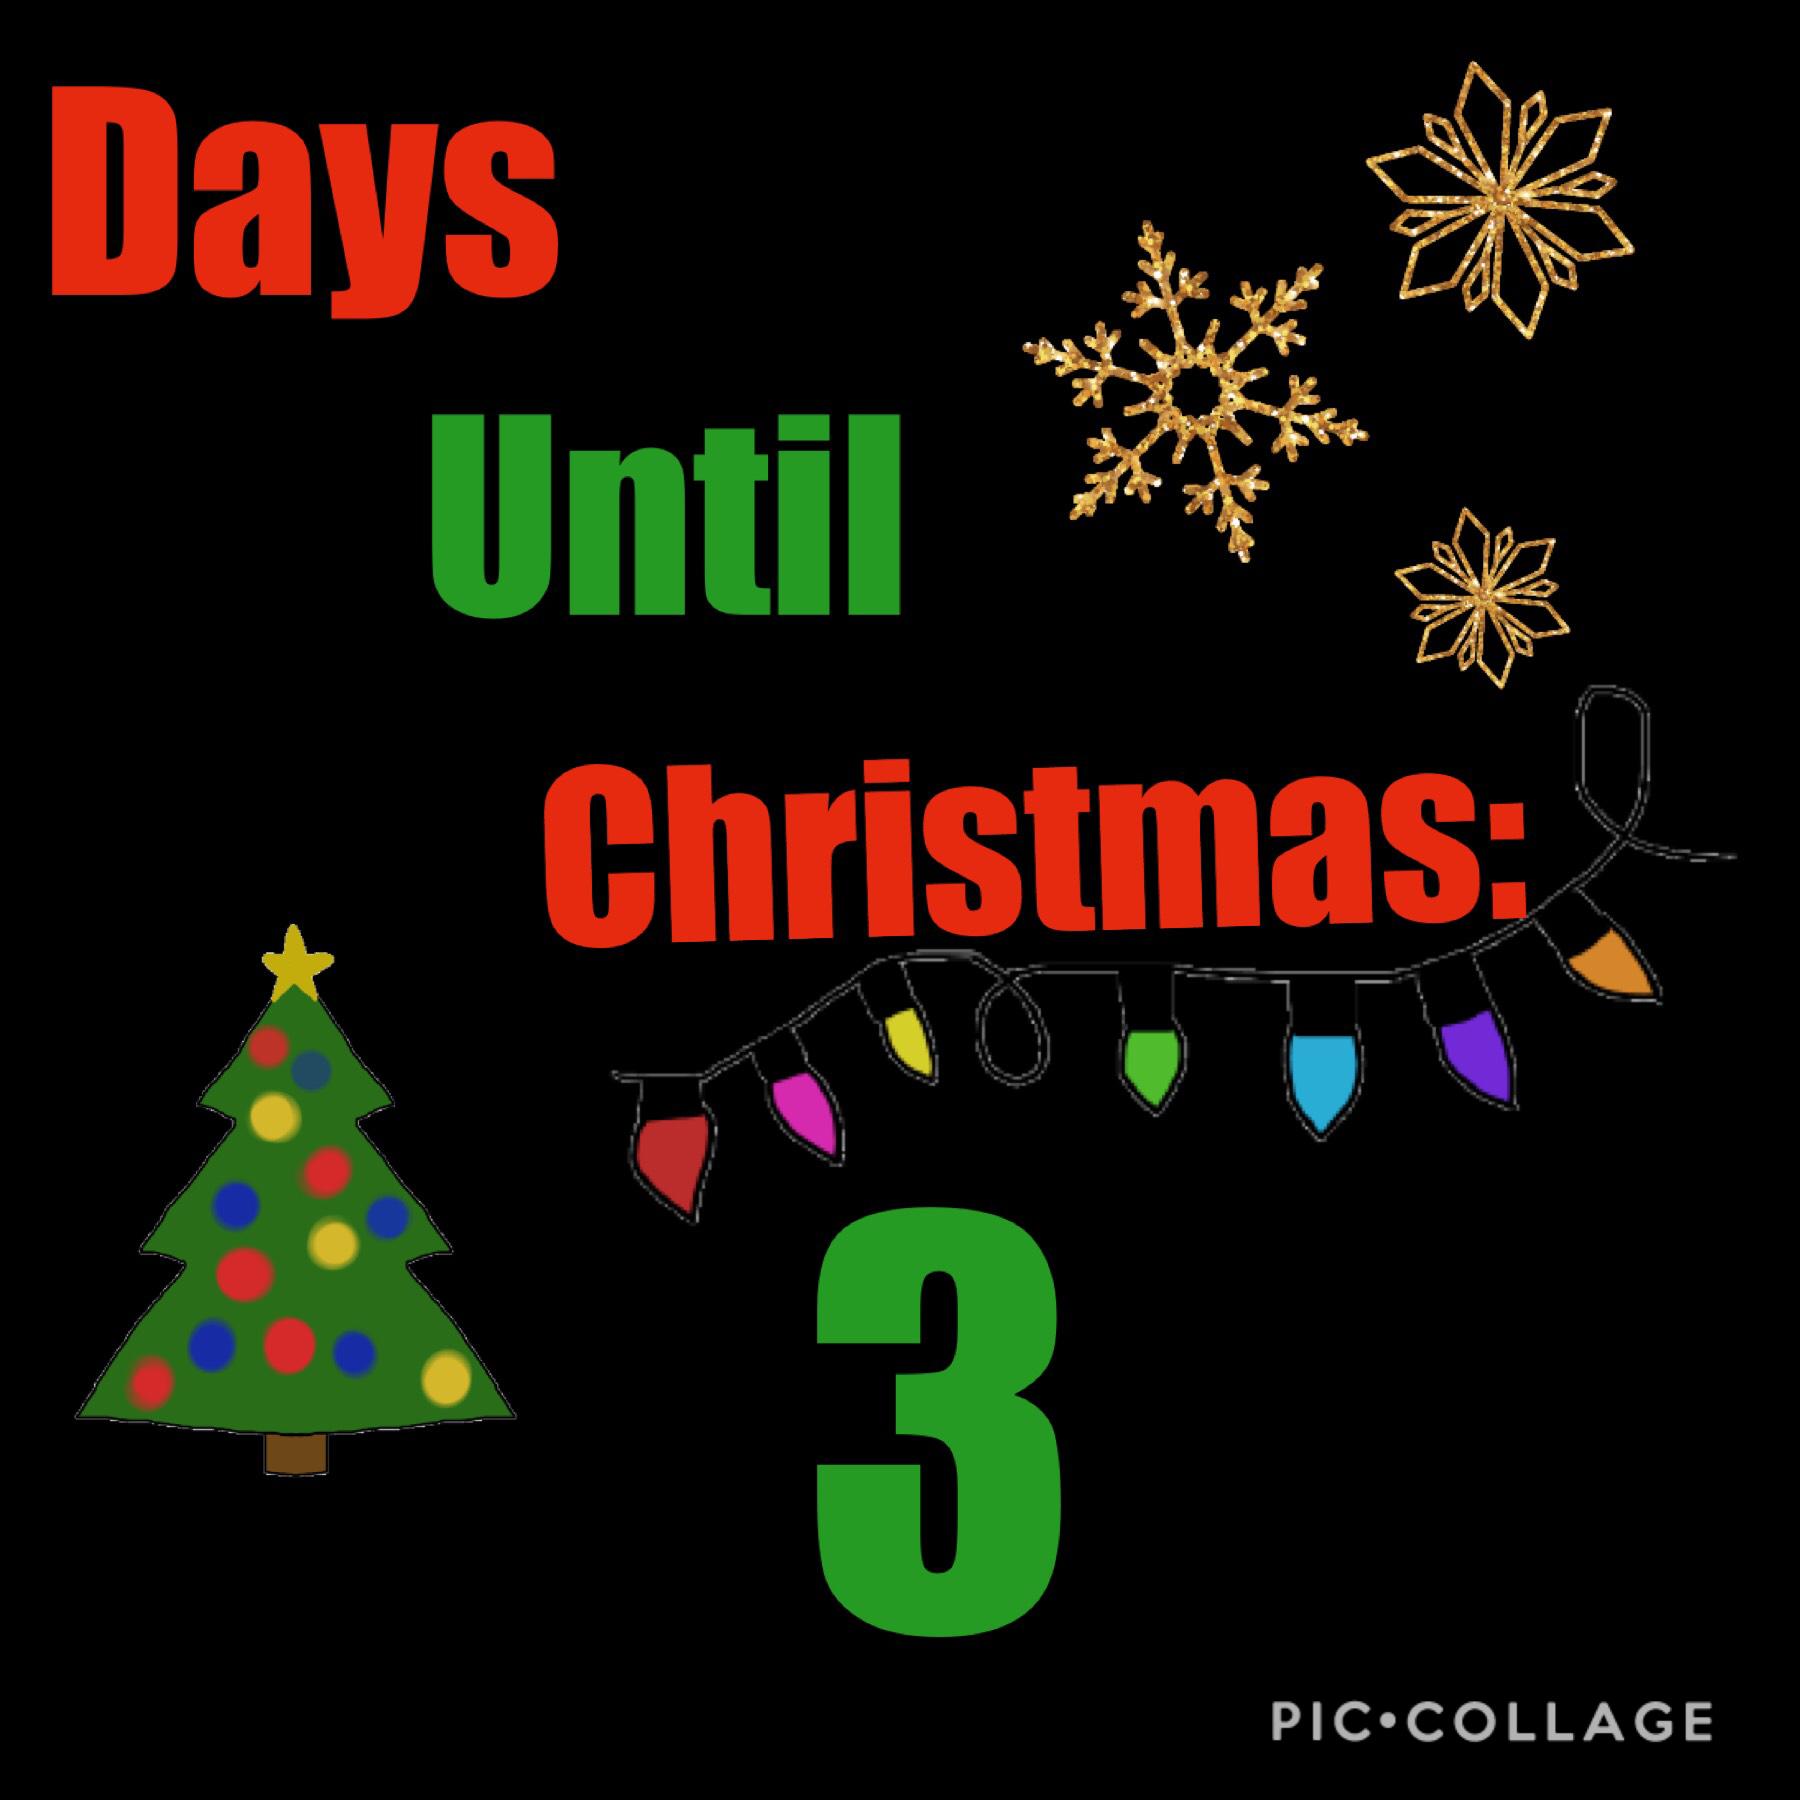 3 days until Christmas!!!